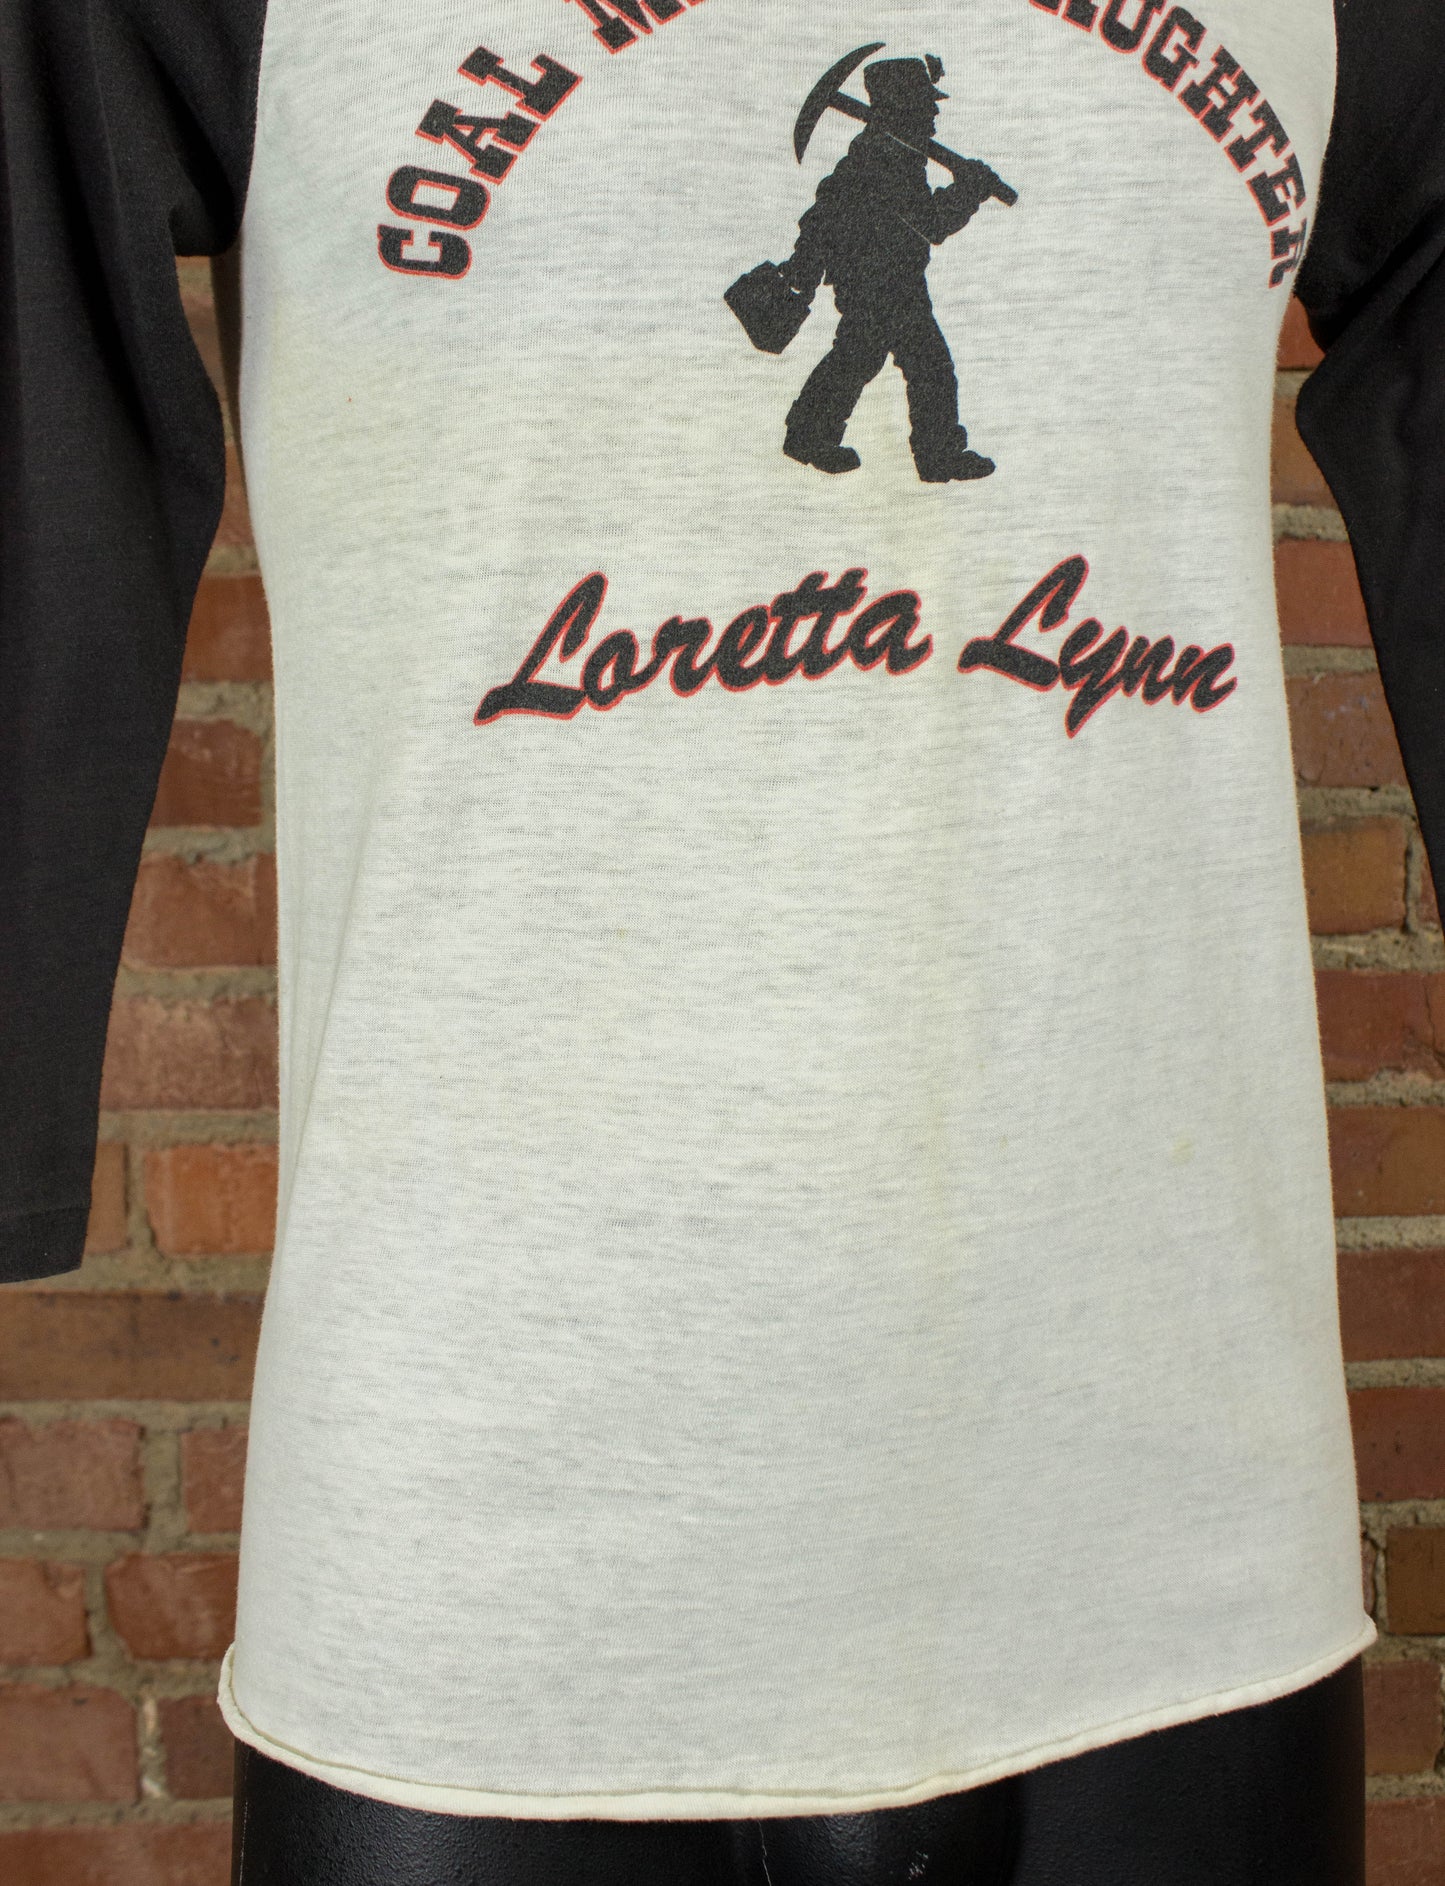 Vintage Loretta Lynn Concert T Shirt 80s Coal Miner's Daughter Black and White Raglan Jersey Small